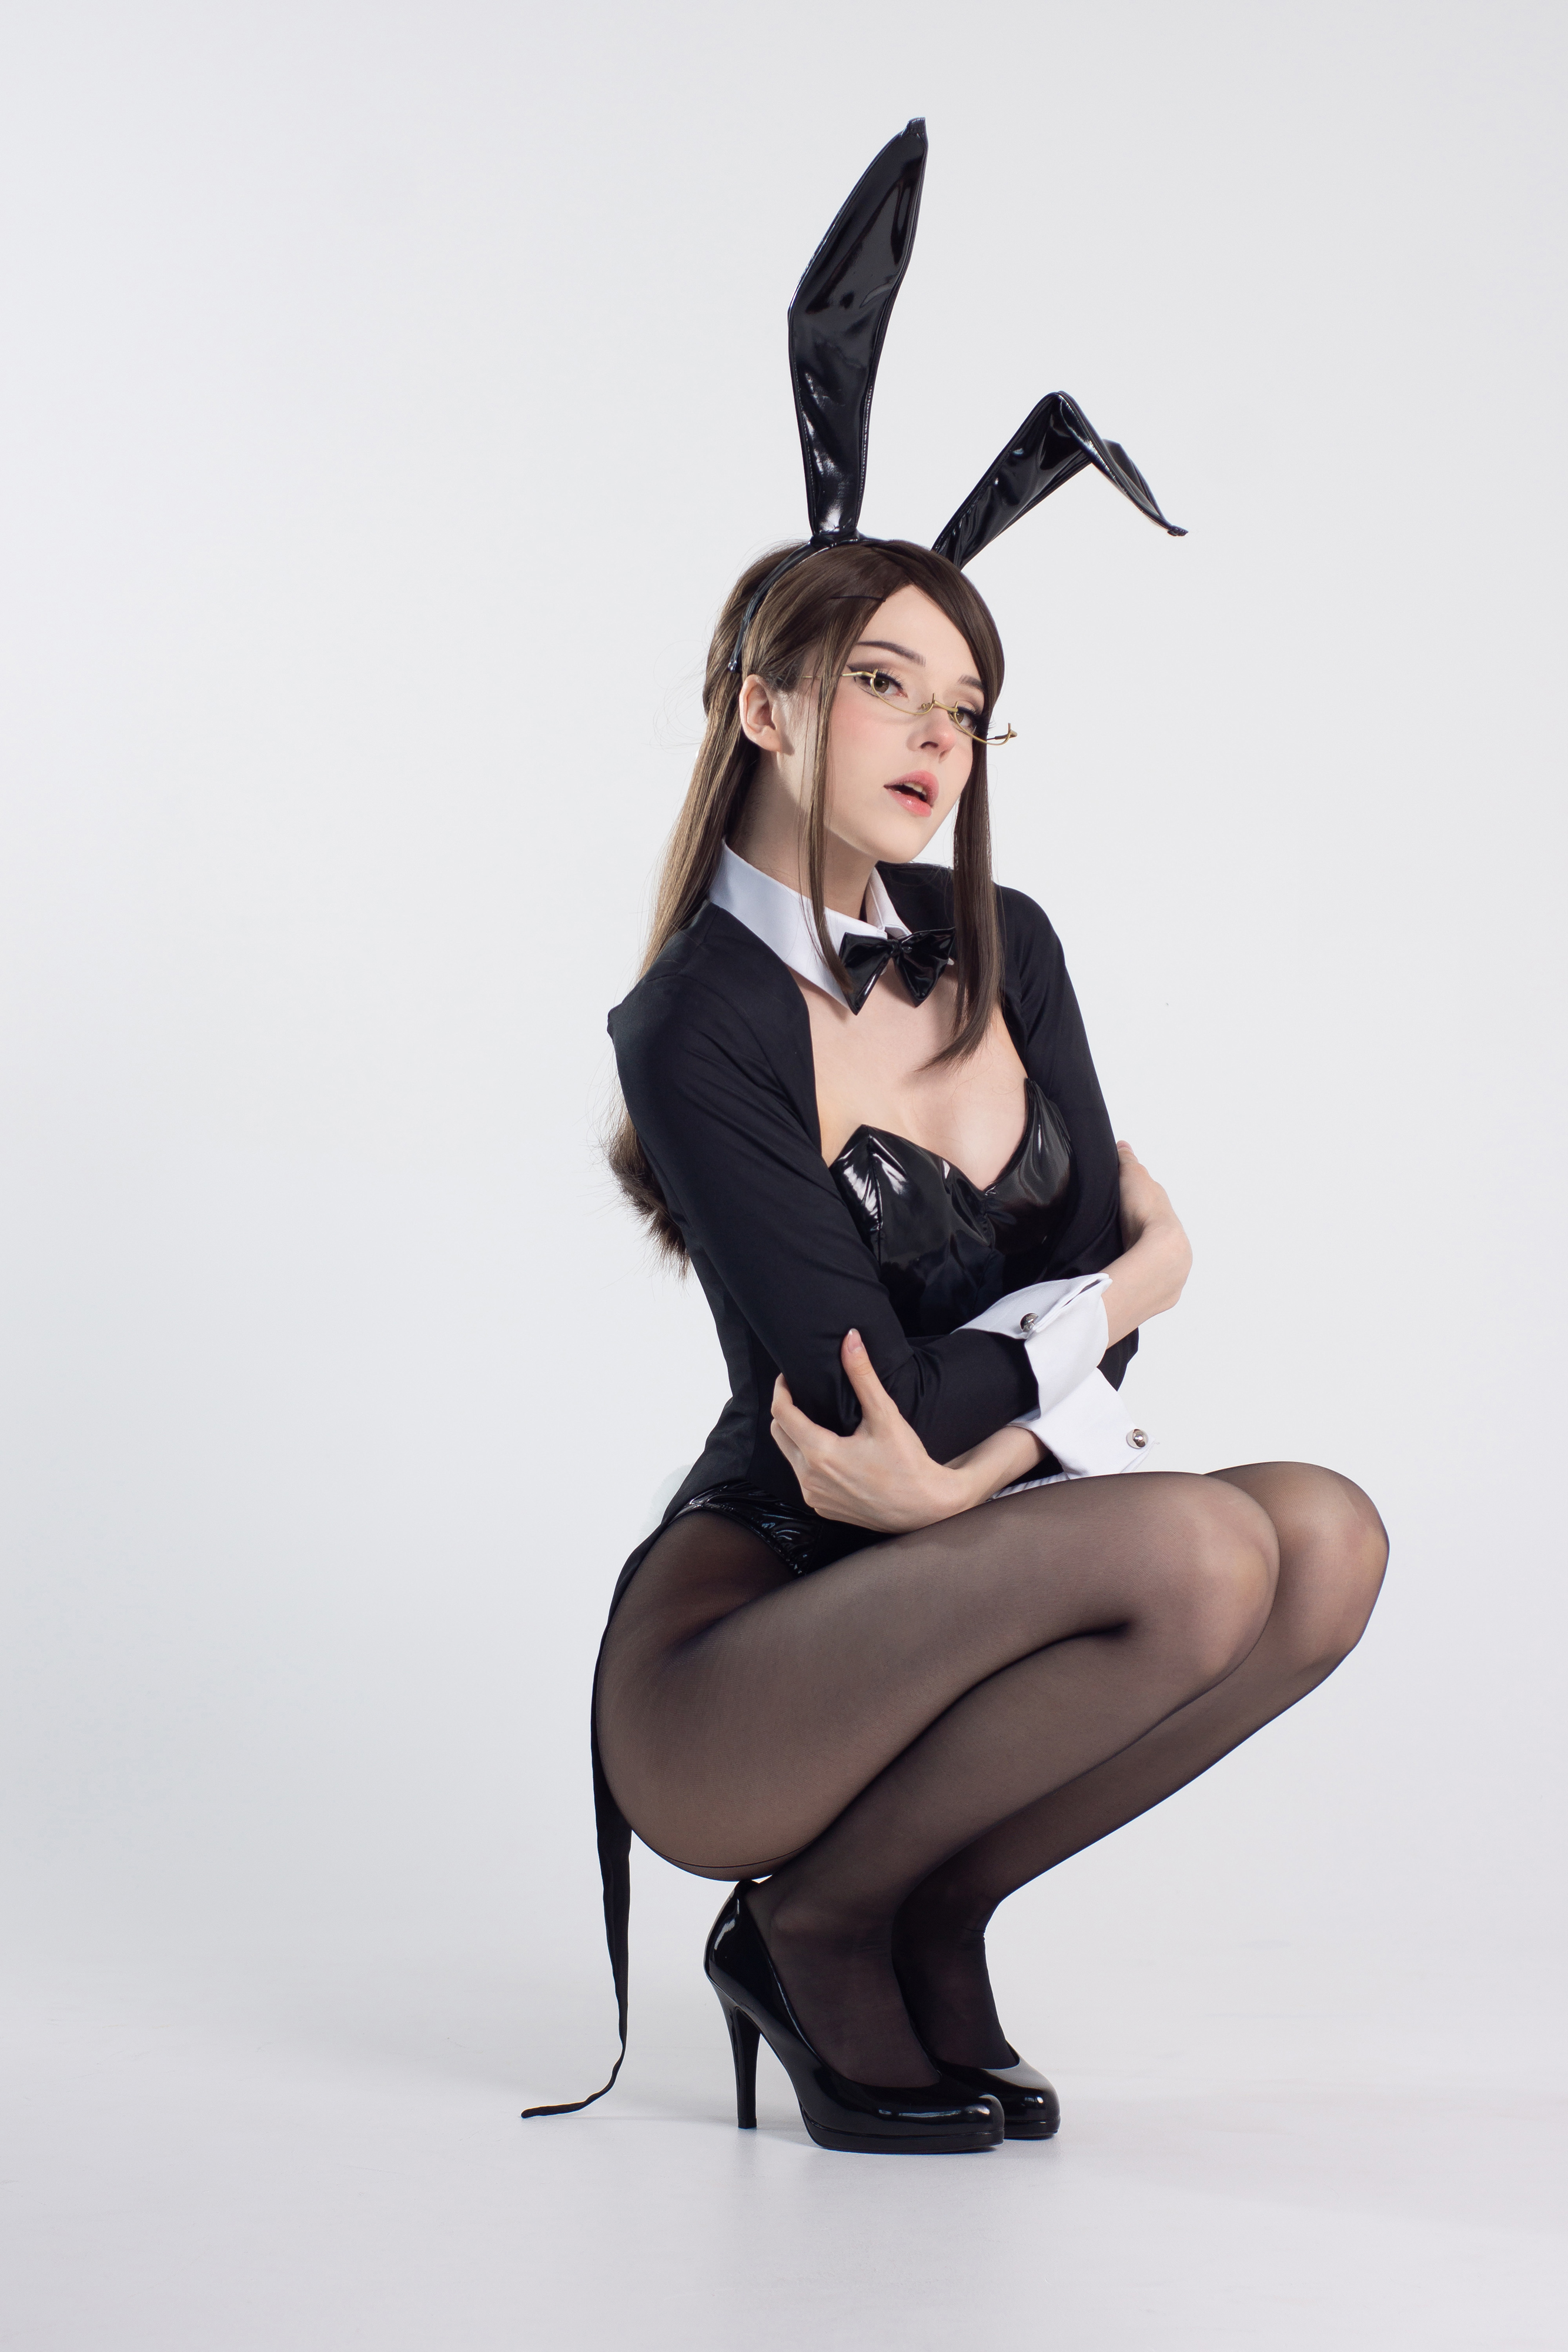 People 2667x4000 Candy Balll women model cosplay Yuiko Okuzumi (Miru Tights) Miru Tights women indoors high heels pantyhose squatting bunny suit bunny girl